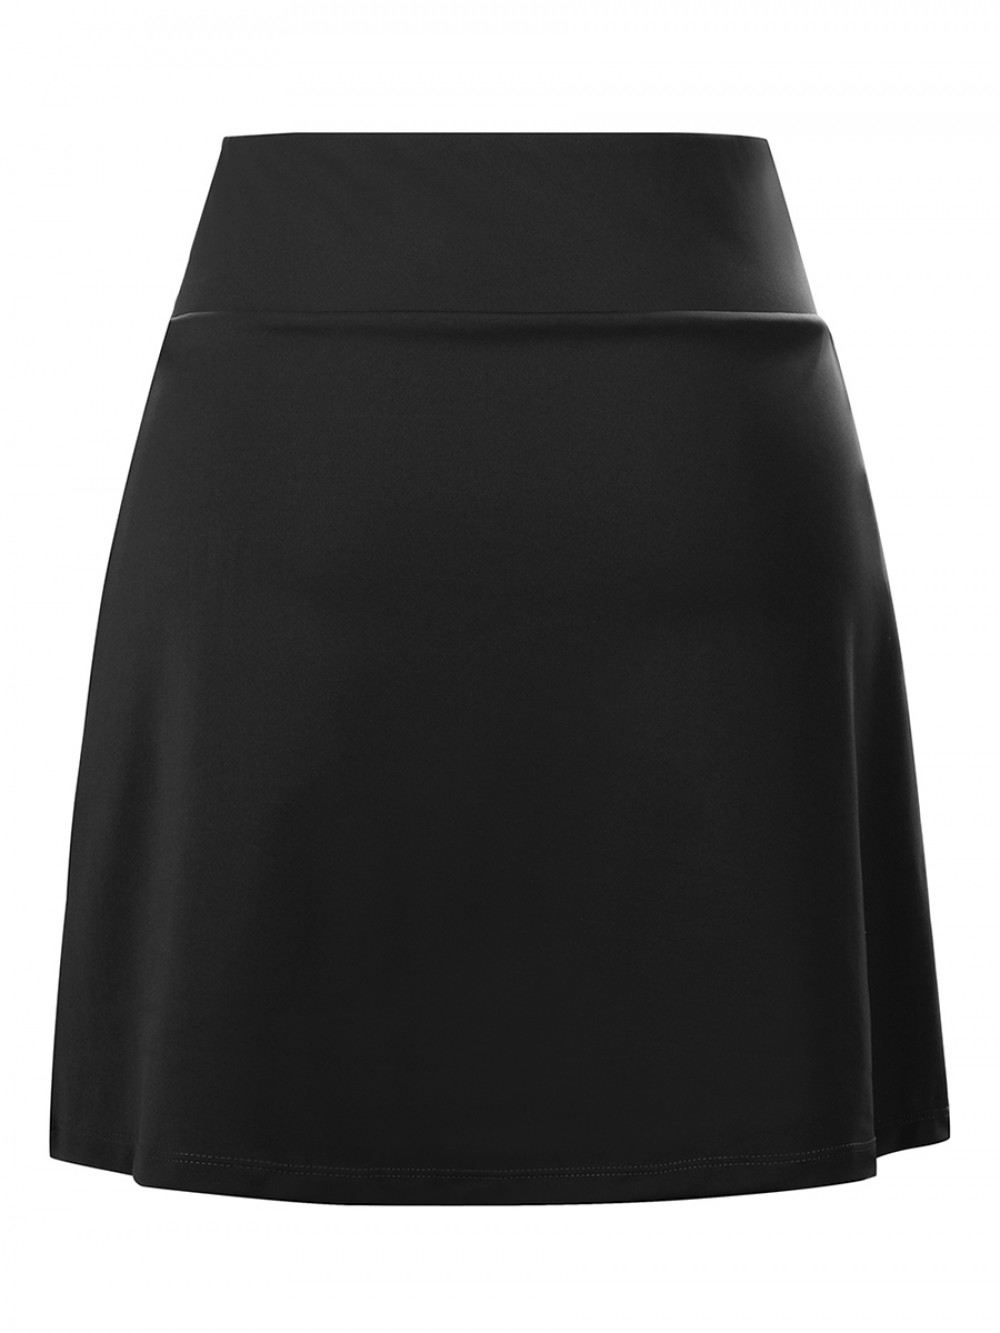 Elegant Black High Waist Tennis Skirt With Pocket Sportswear